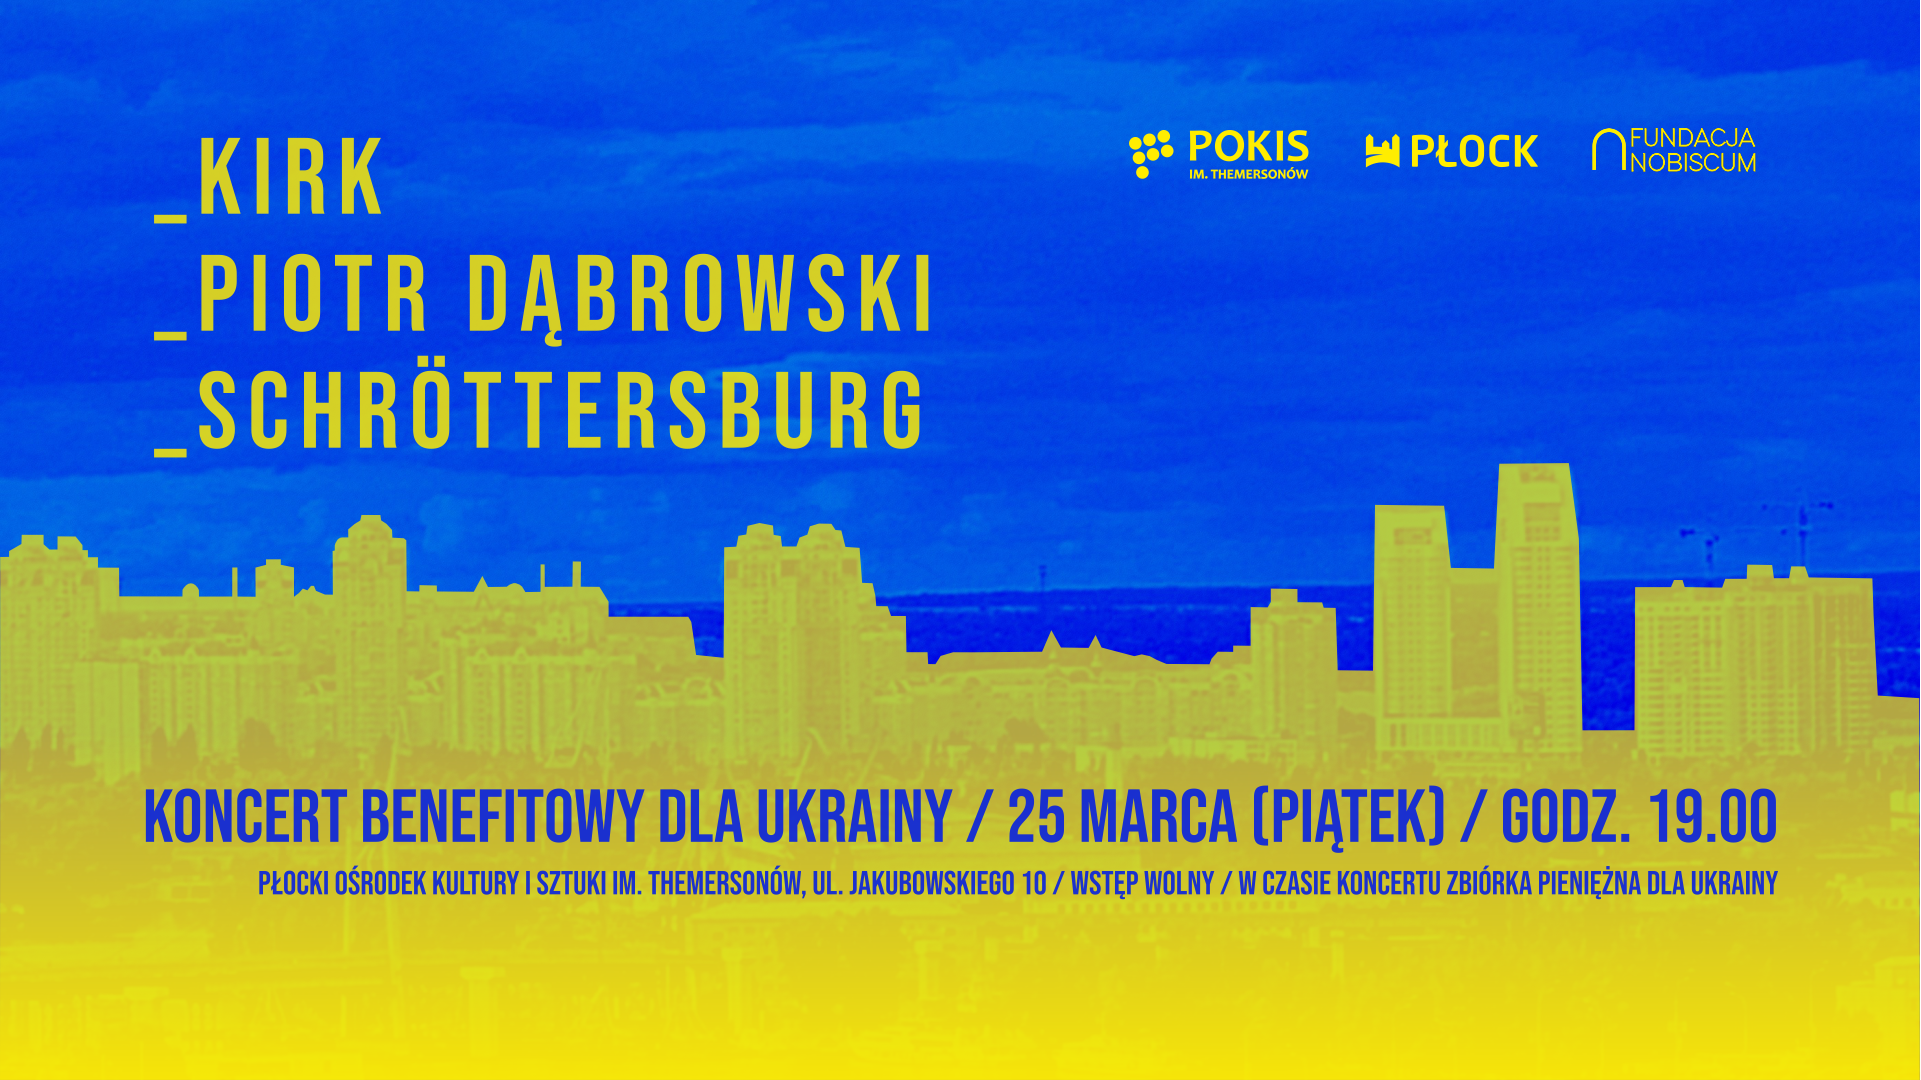 Koncert benefitowy dla Ukrainy: kIRk, Piotr Dąbrowski, Schröttersburg